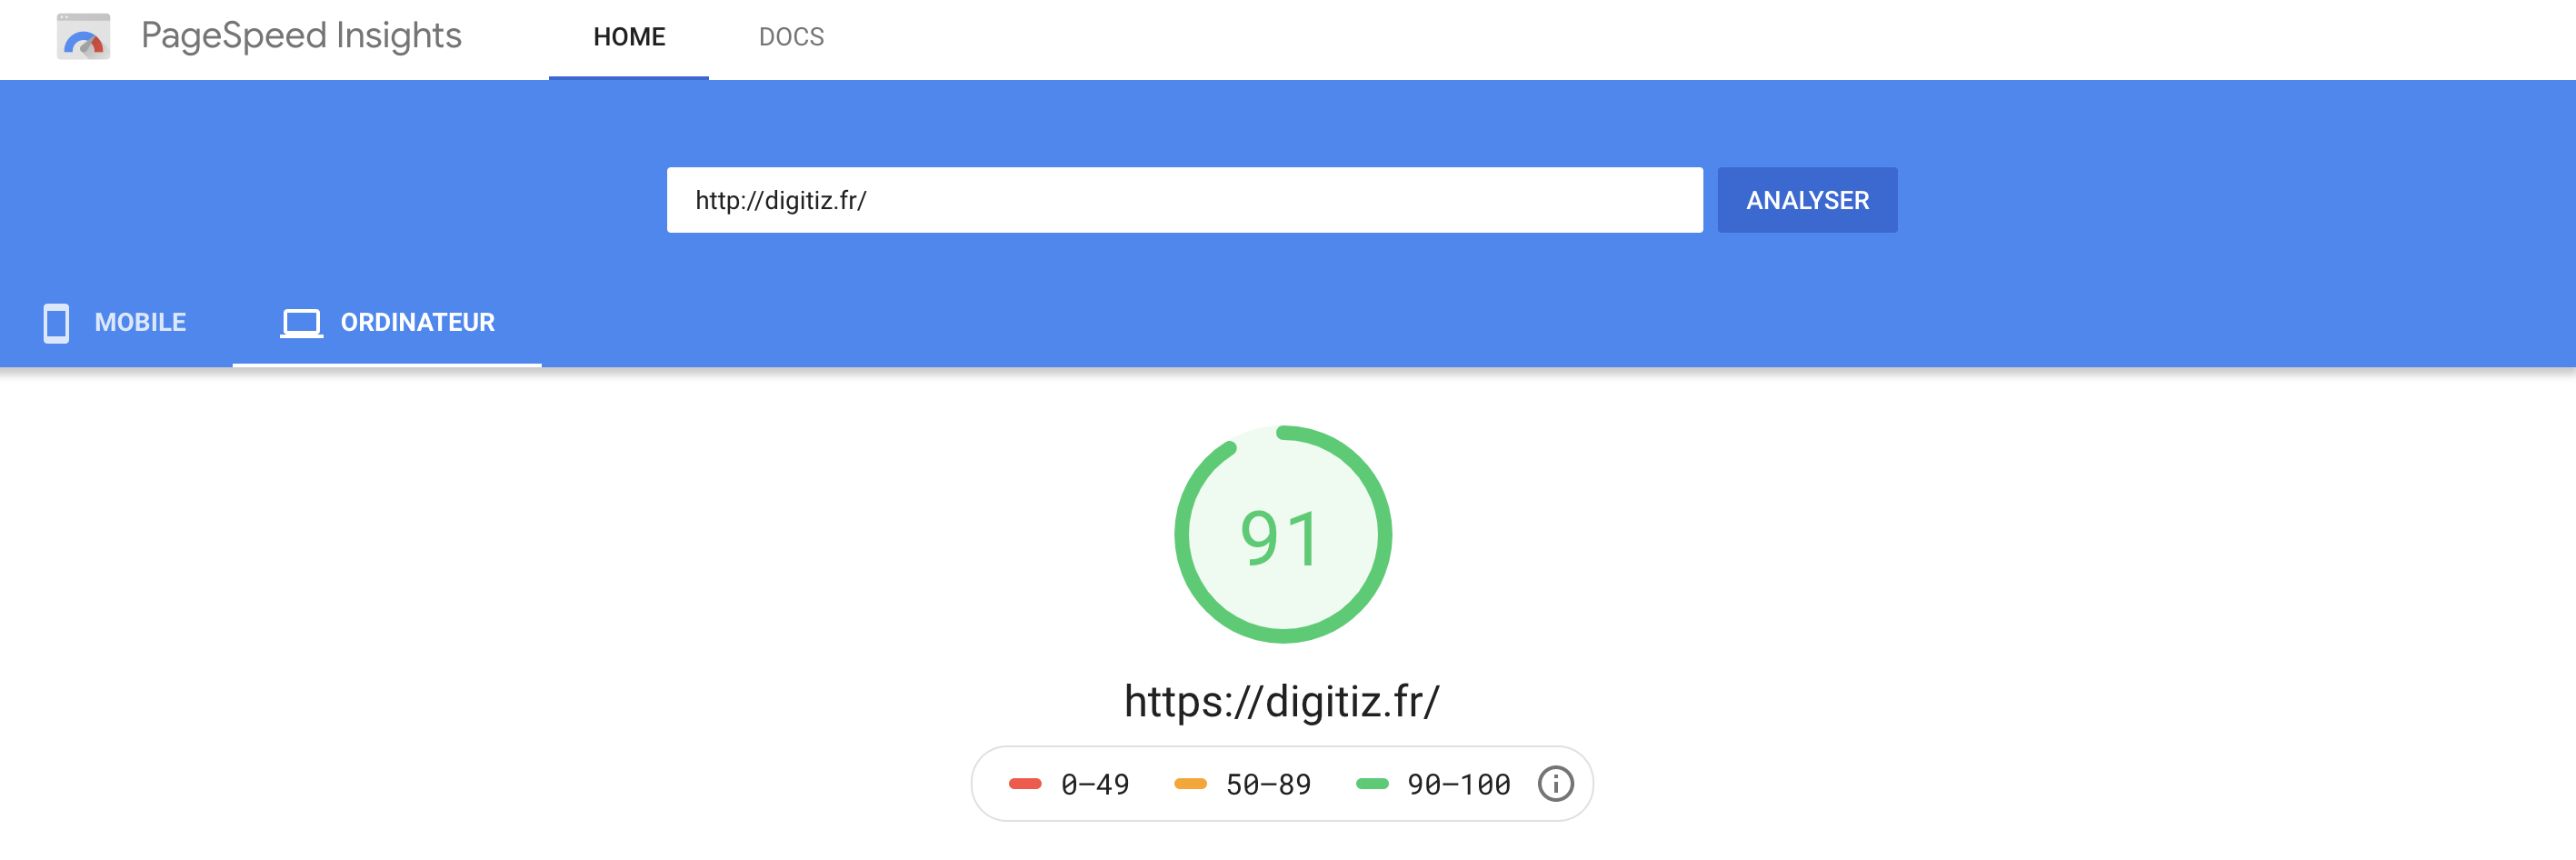 Google SpeedPage Insights